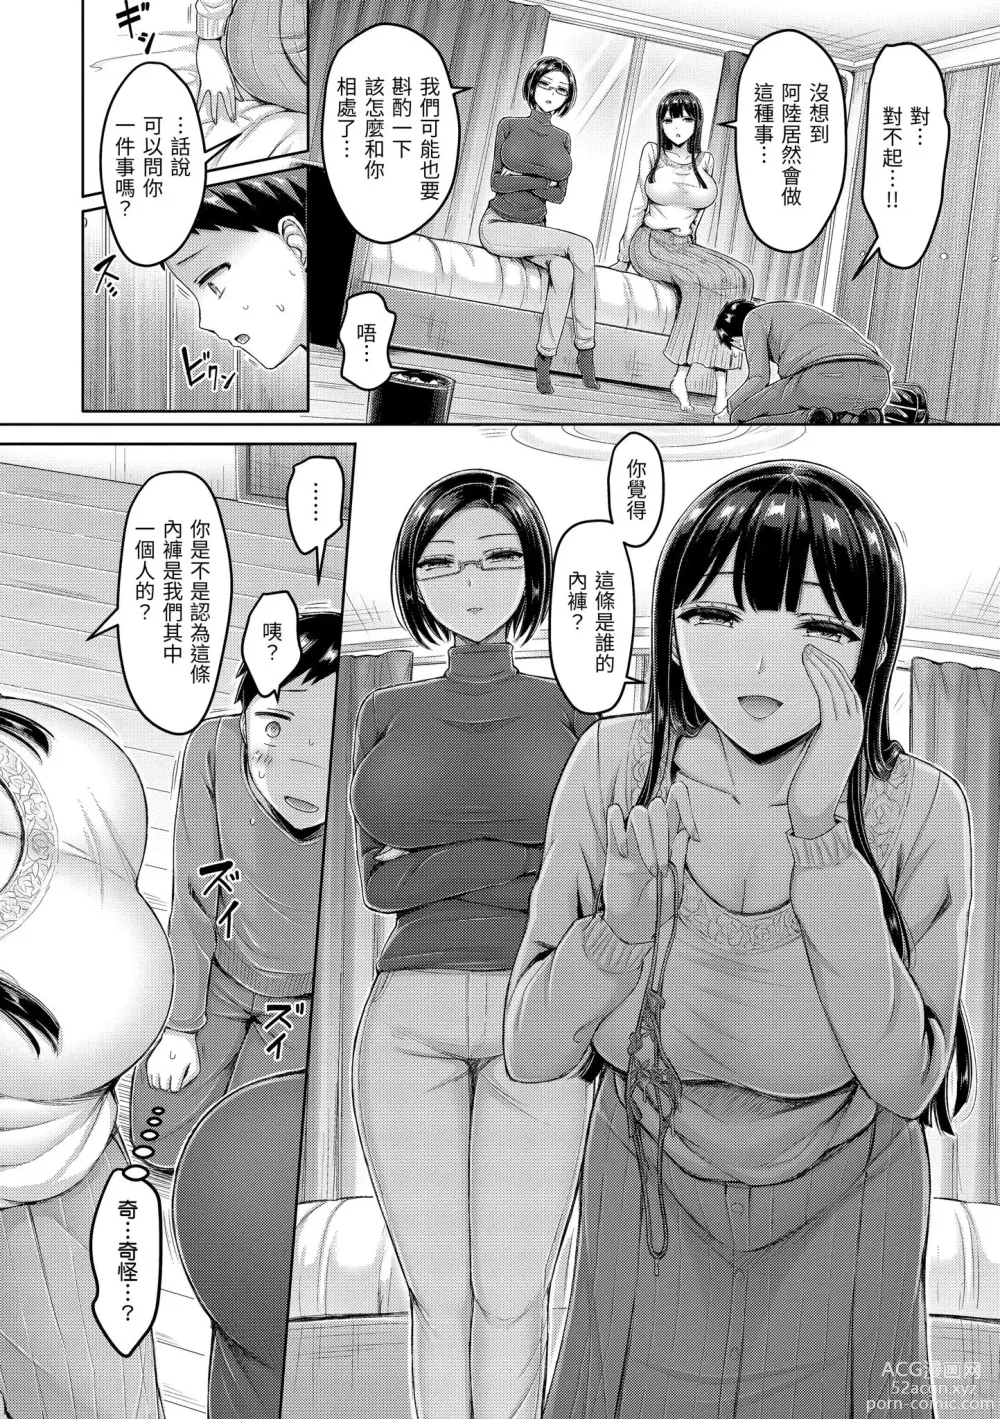 Page 166 of manga 來勢胸胸！